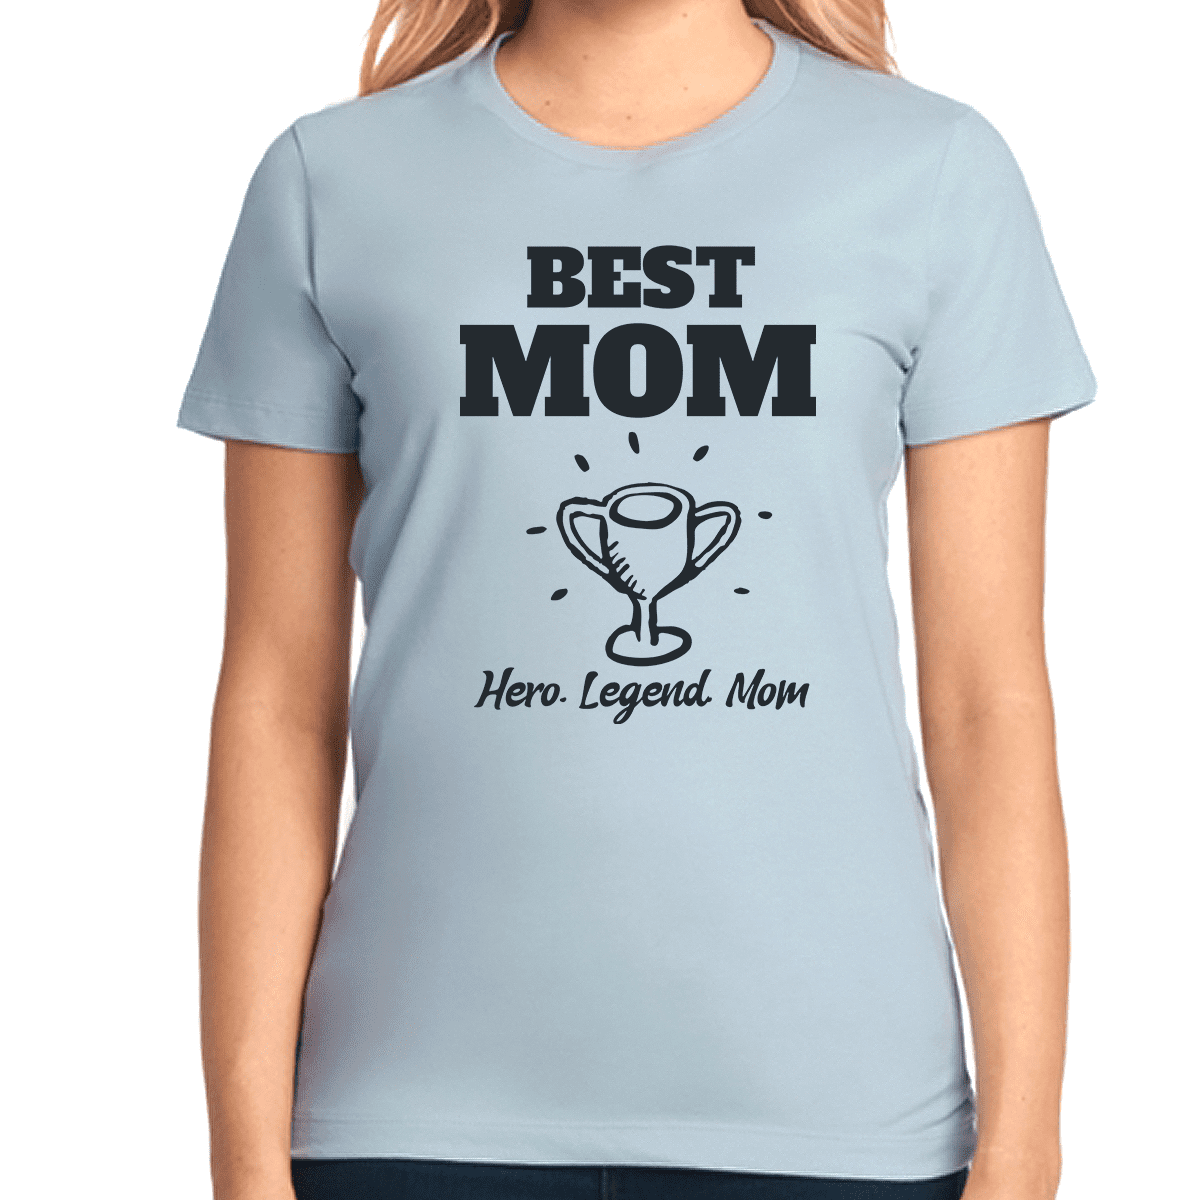 Mom Life Shirt Funny Mom Shirt Mom Shirt Gift for Mom New 